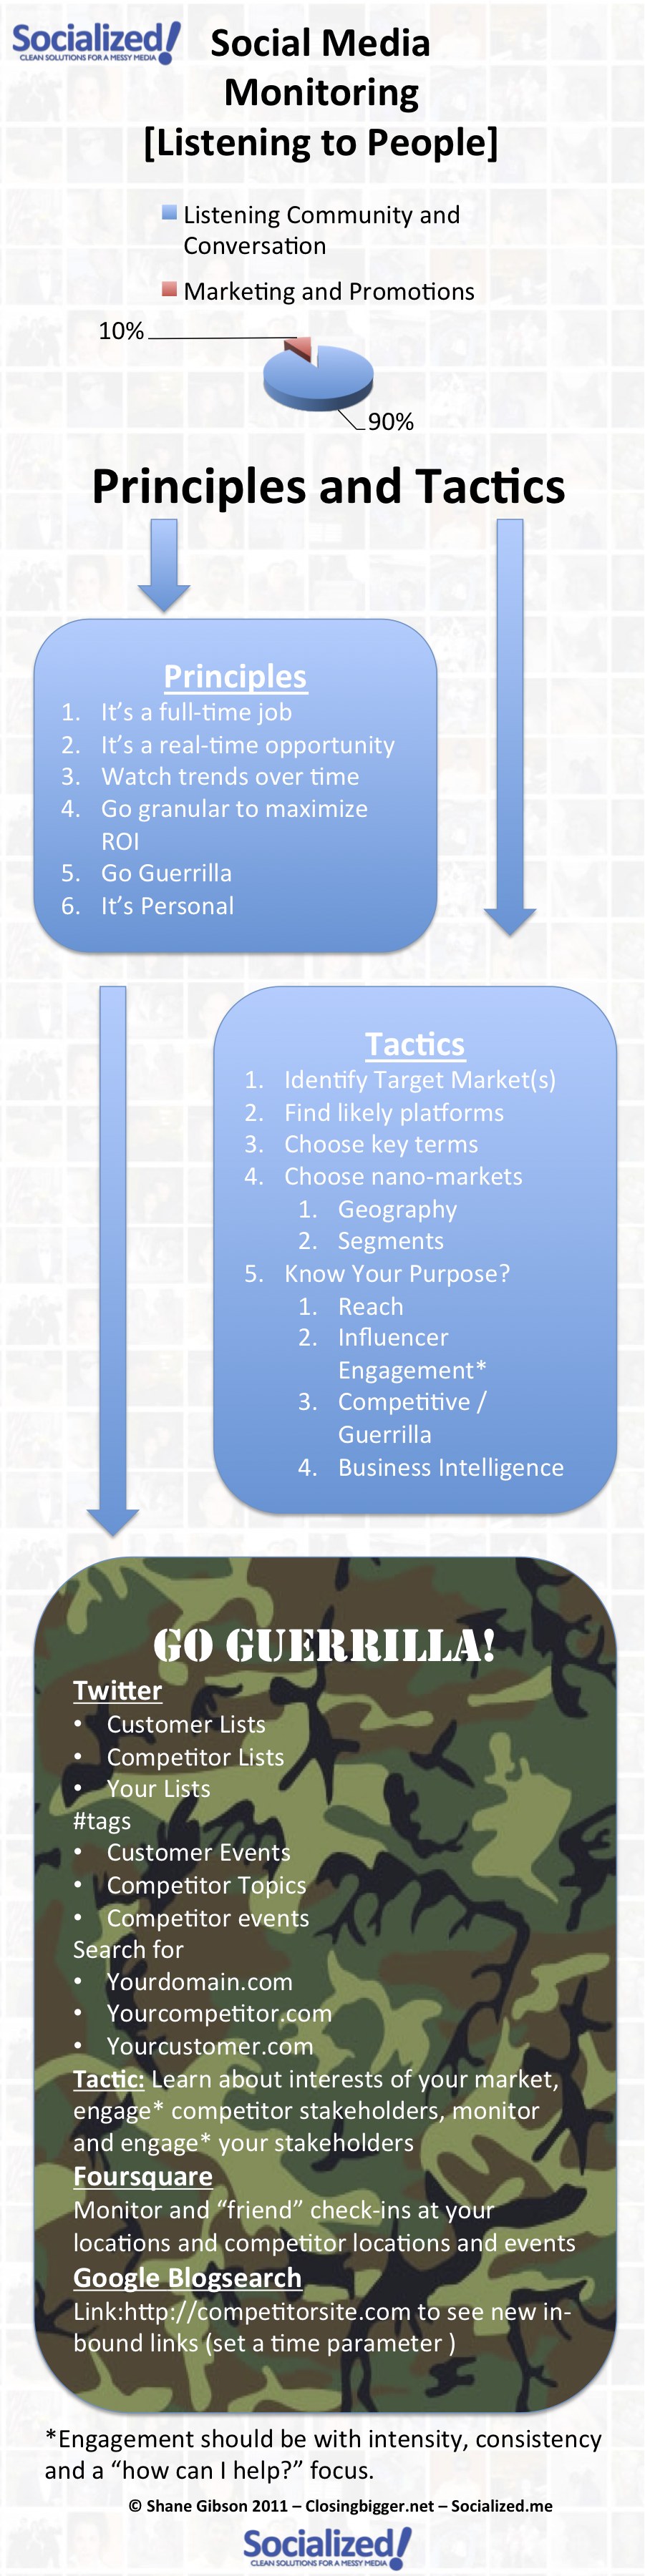 social-media-monitoring-strategies-infographic